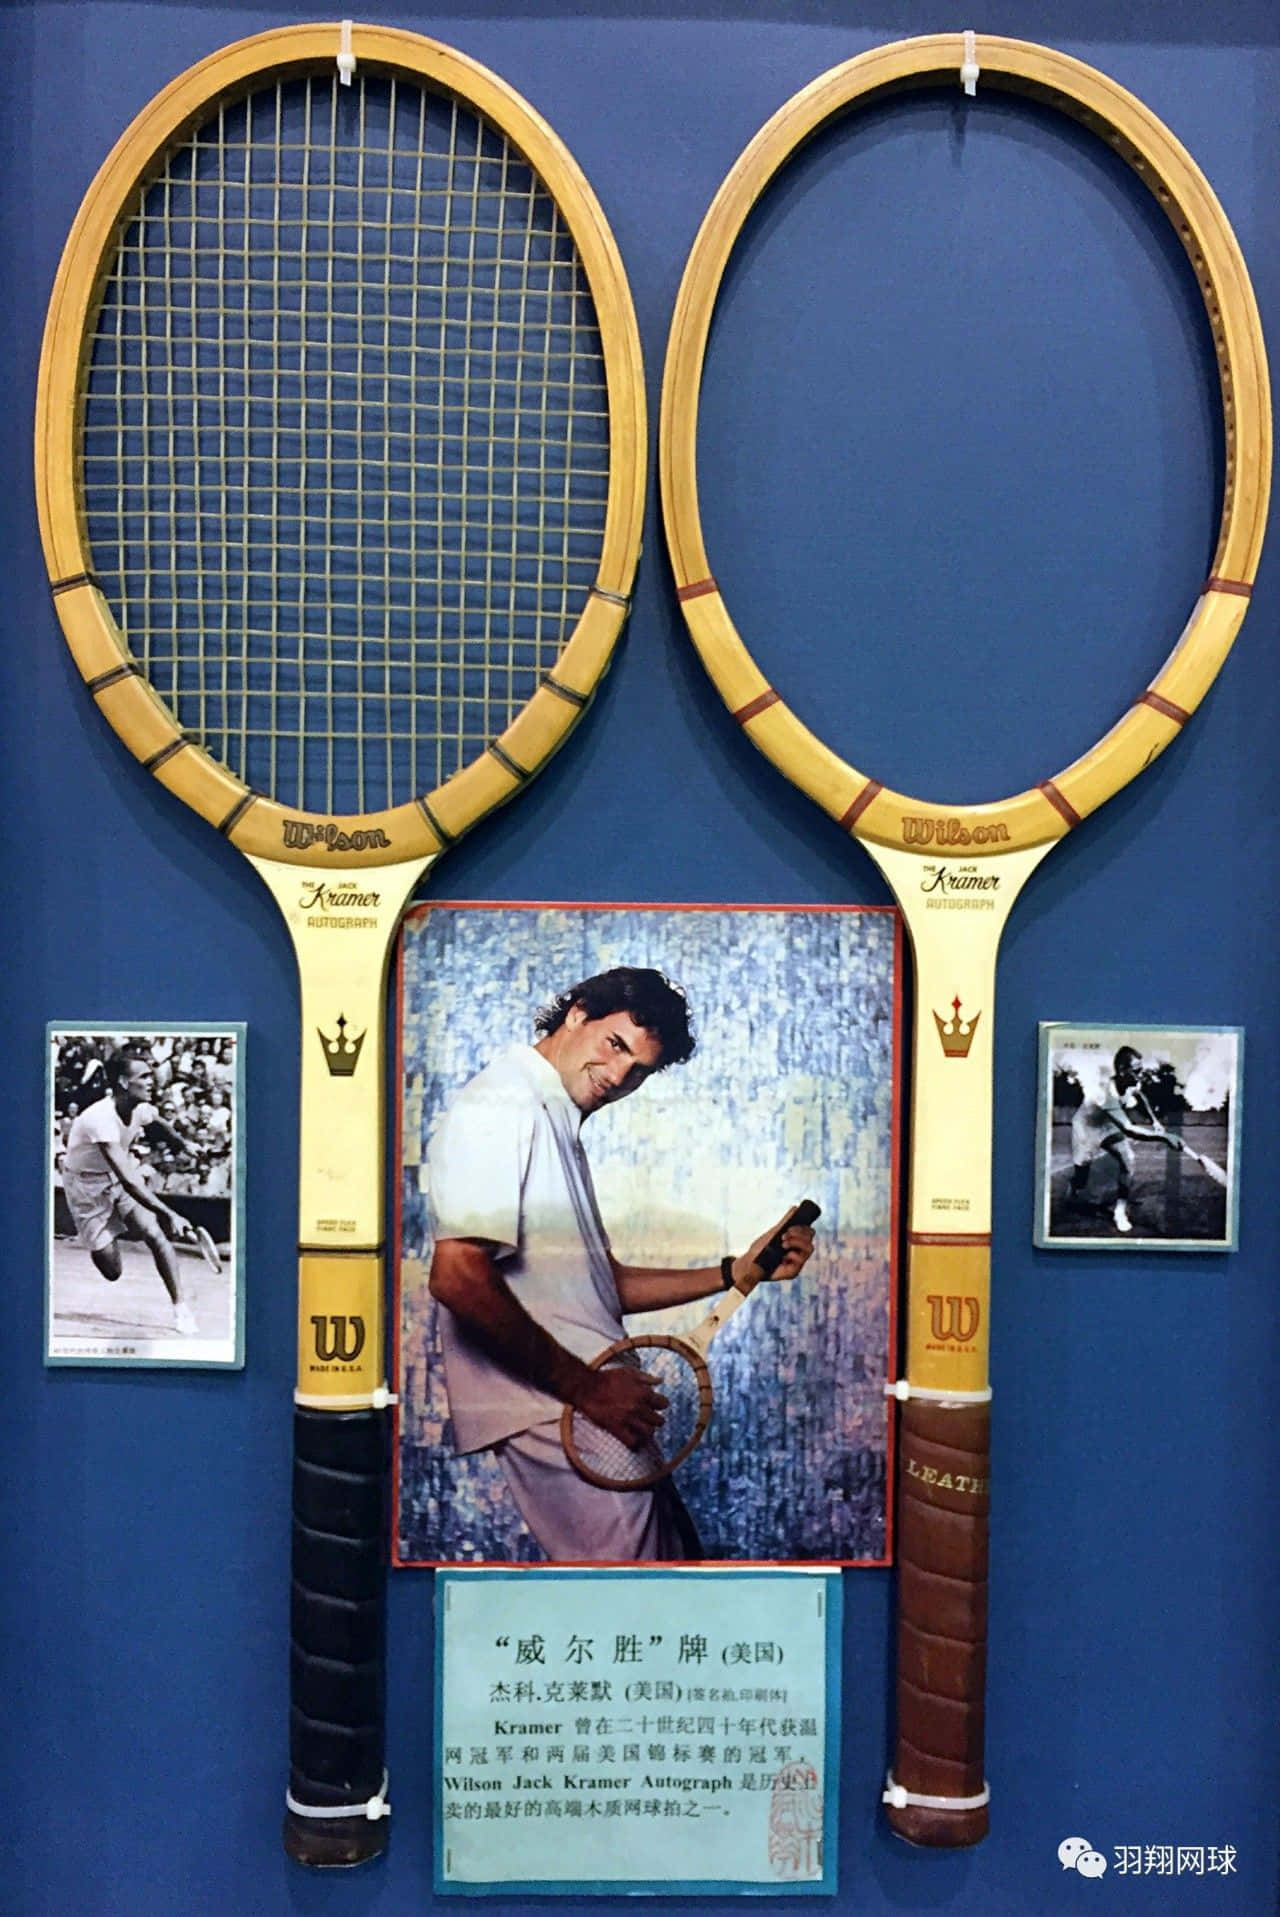 Jack Kramer Wilson Tennis Racket Collection Wallpaper